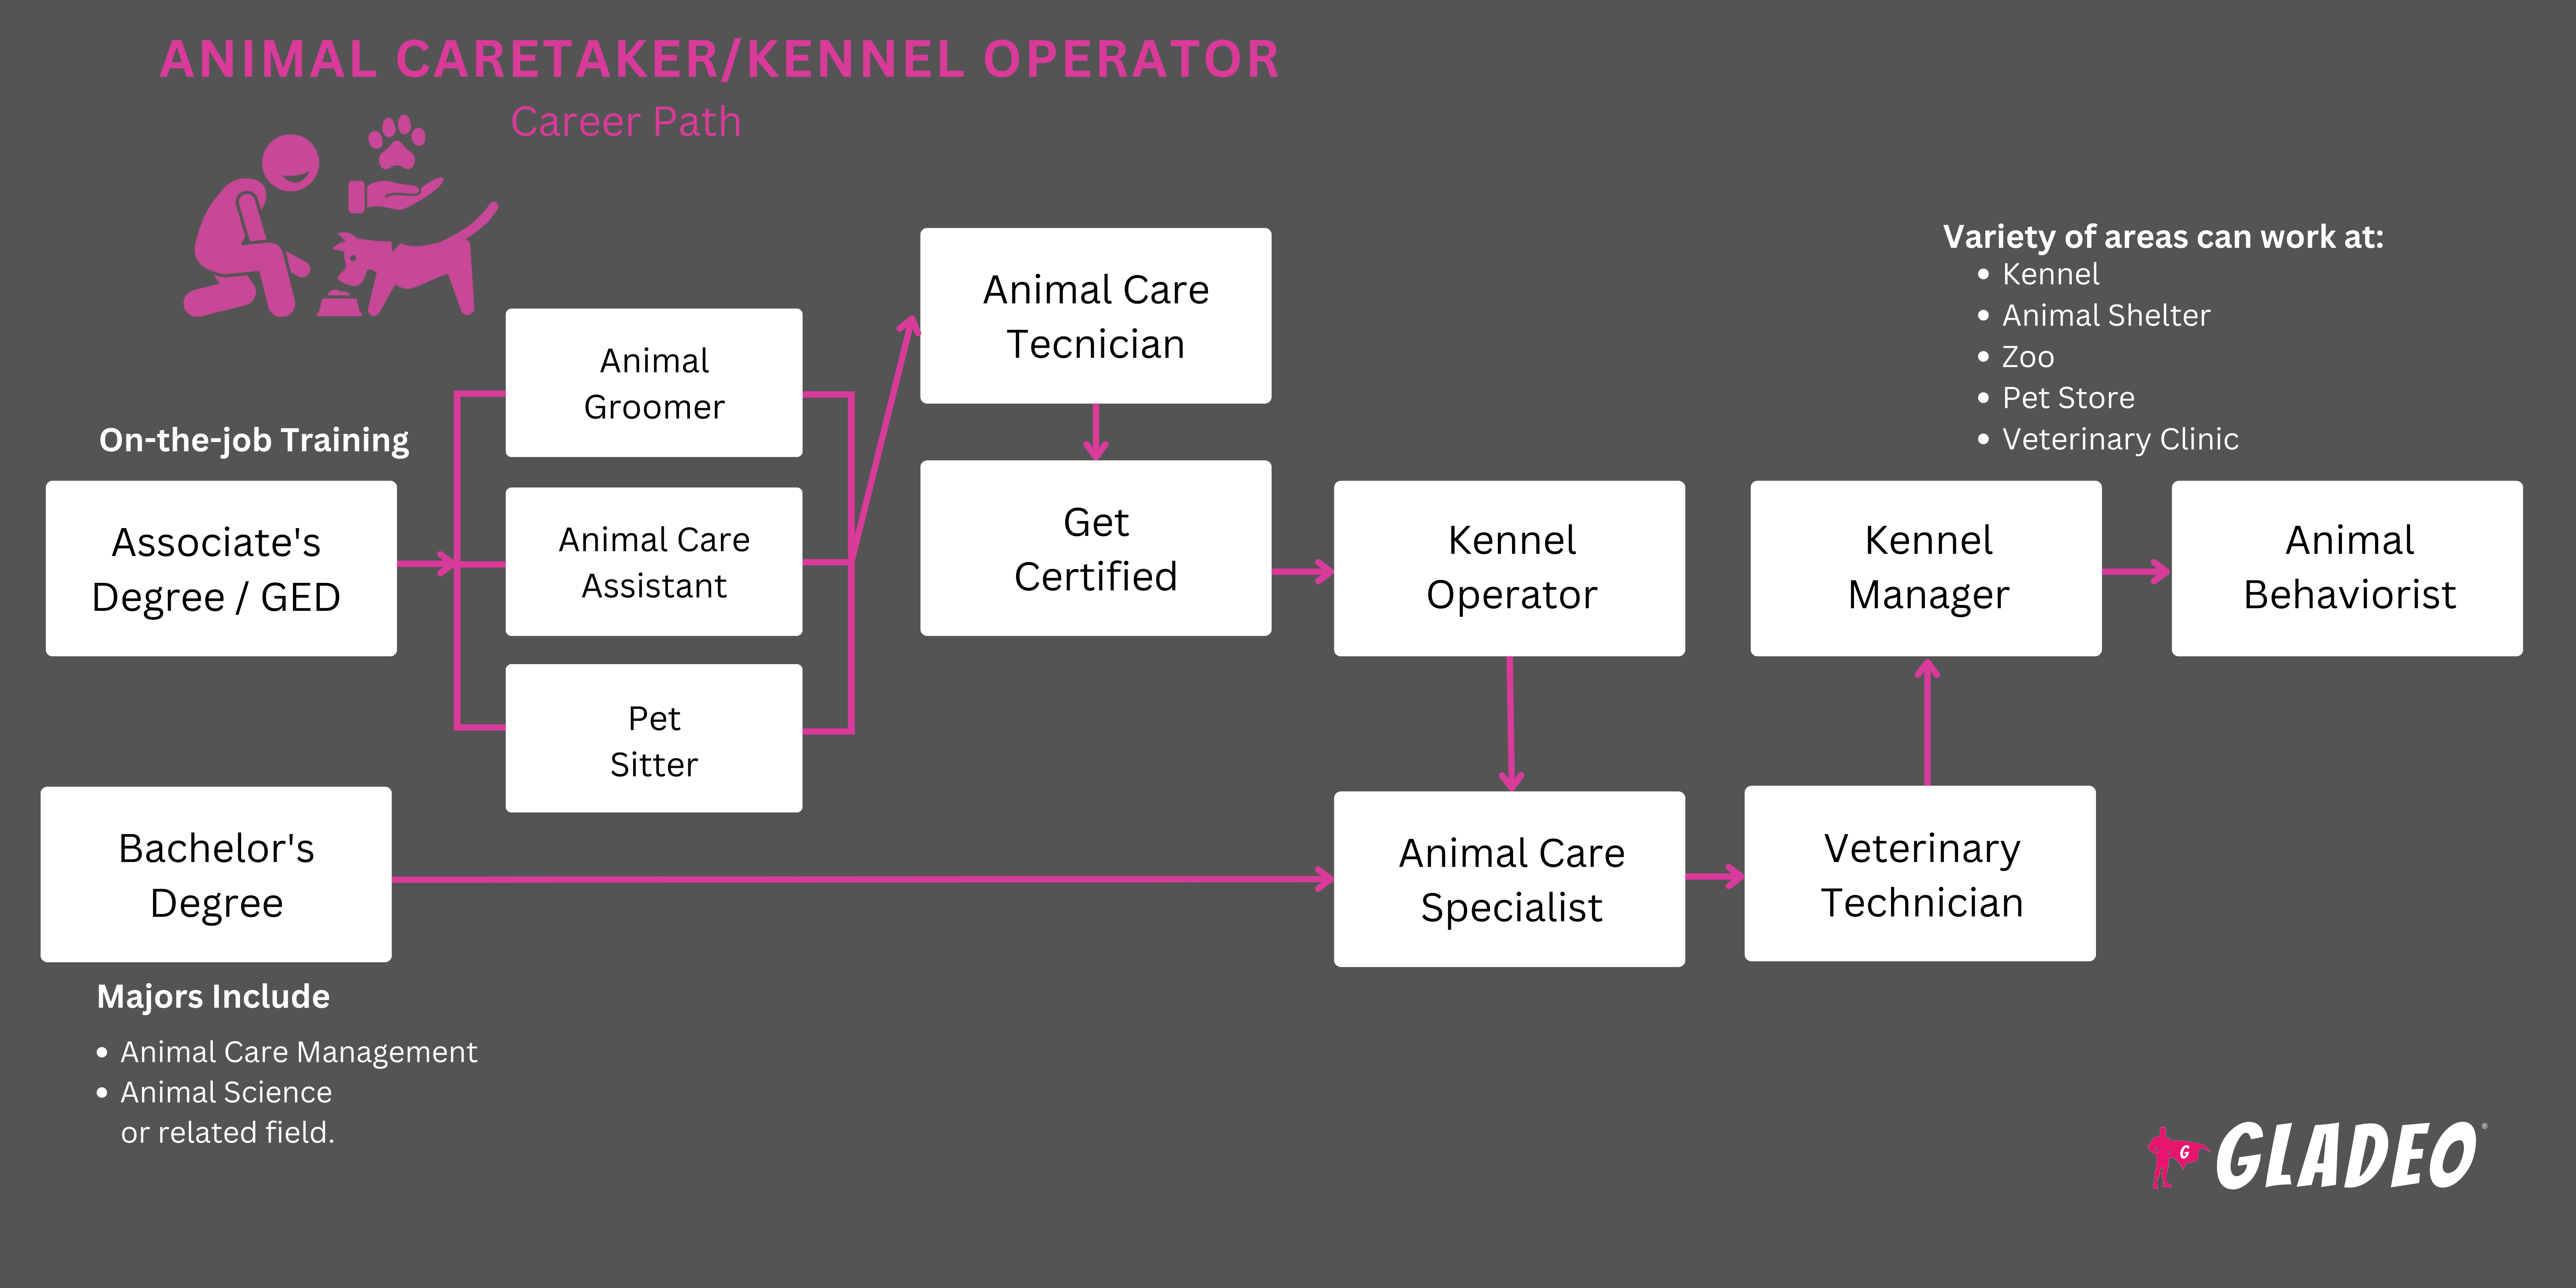 Roadmap ng Animal Caretaker/Kennel Operator